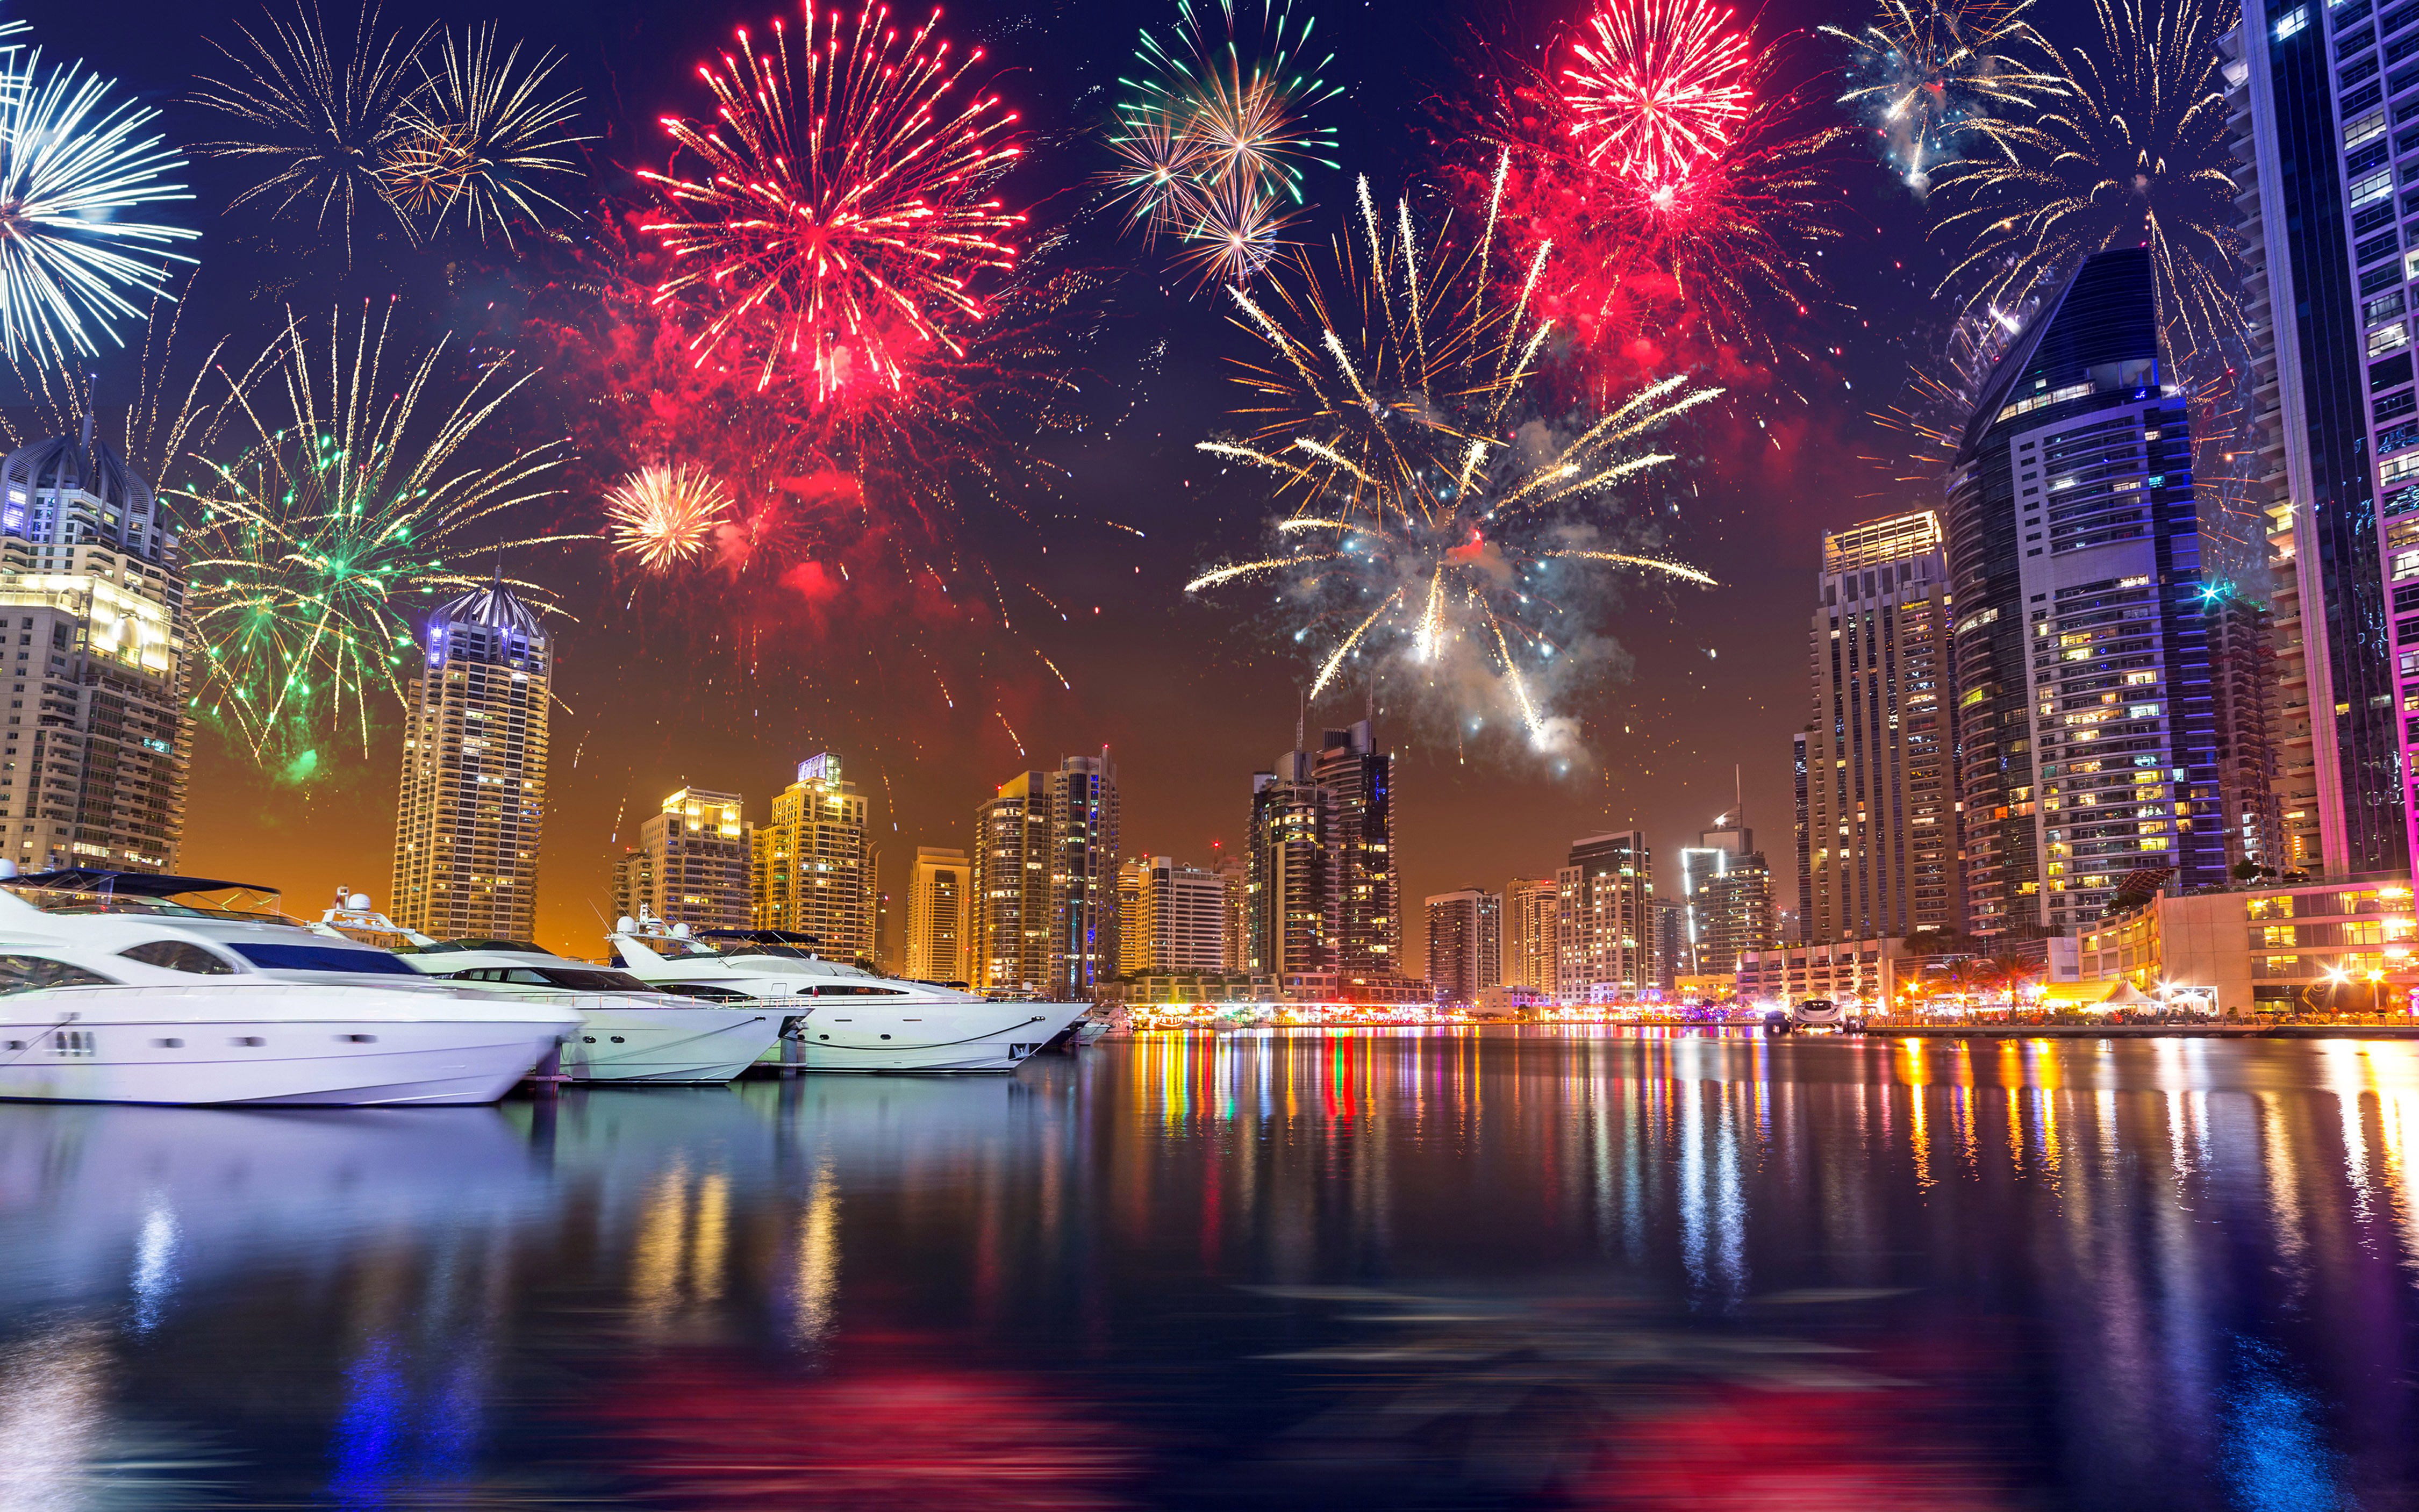 Fireworks on Christmas Night in Dubai